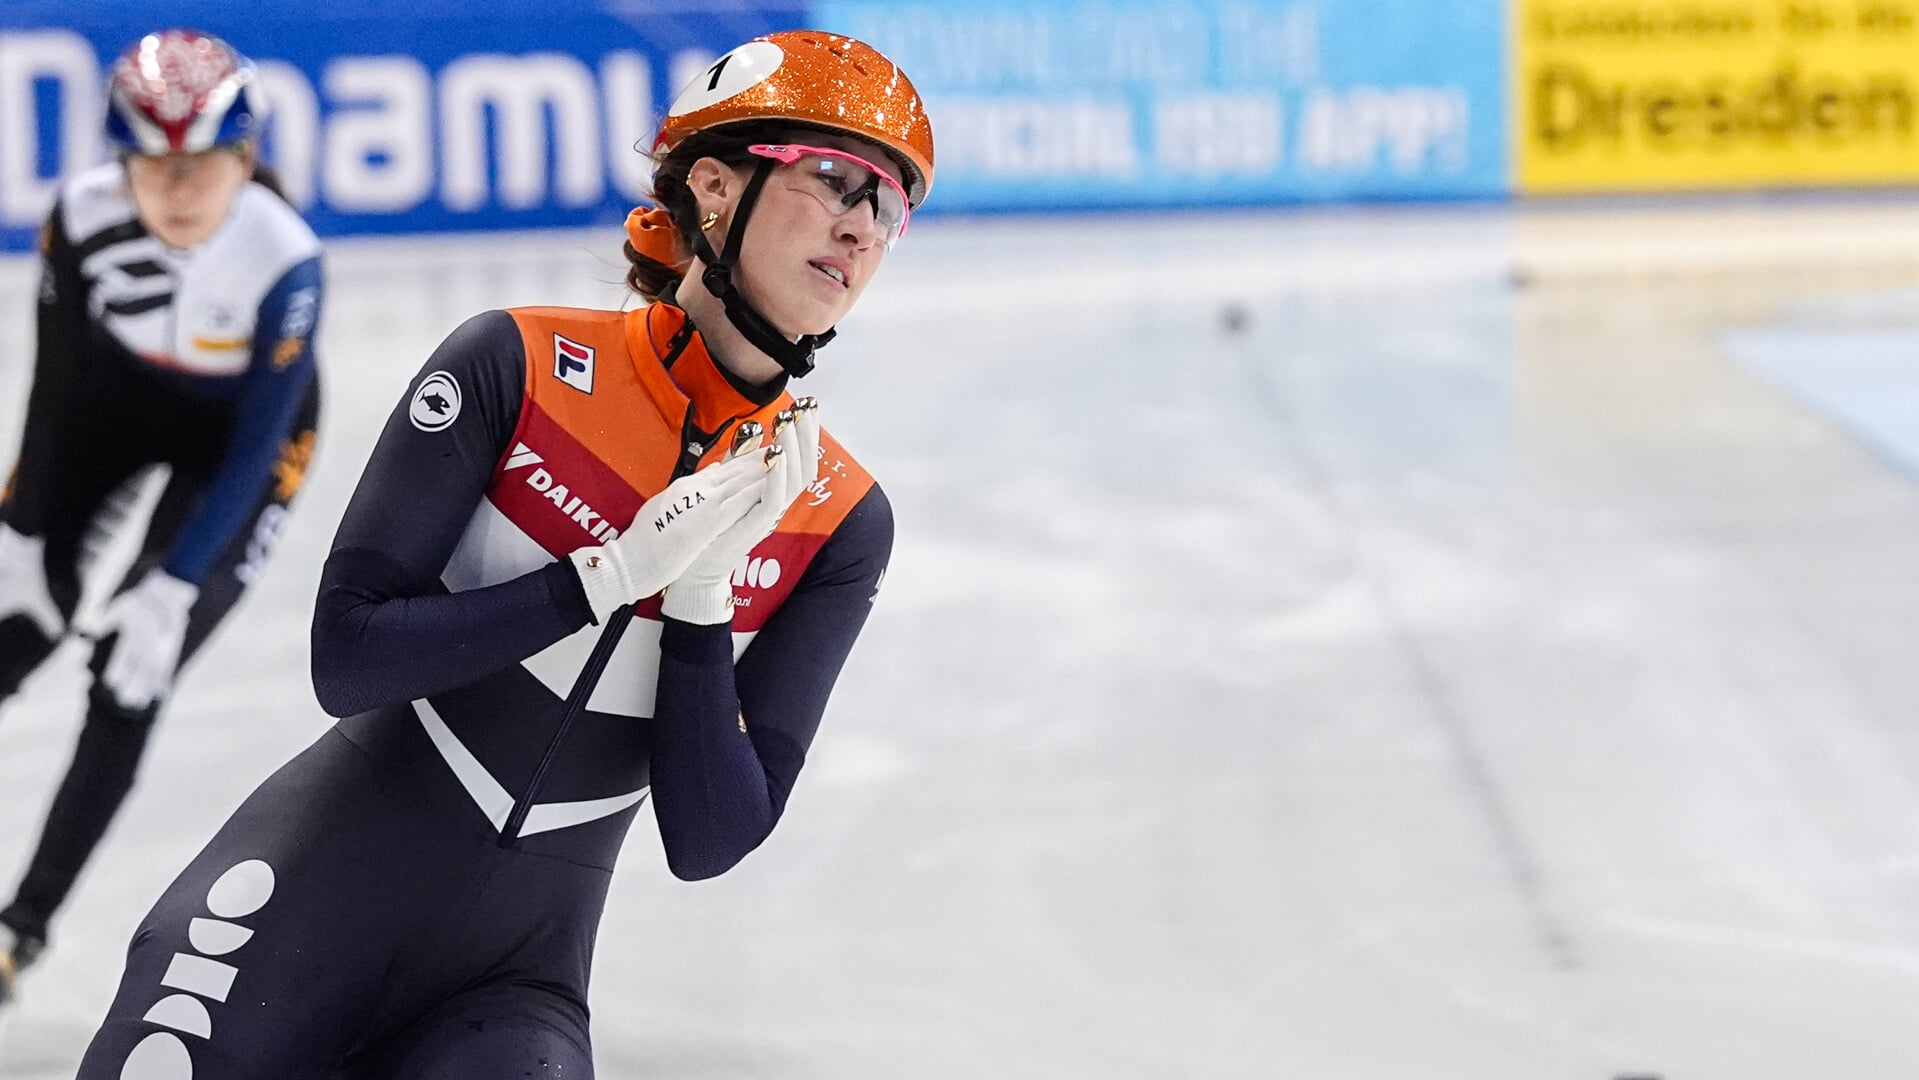 Suzanne Schulting maakte in Dresden haar internationale rentree met drie medailles.